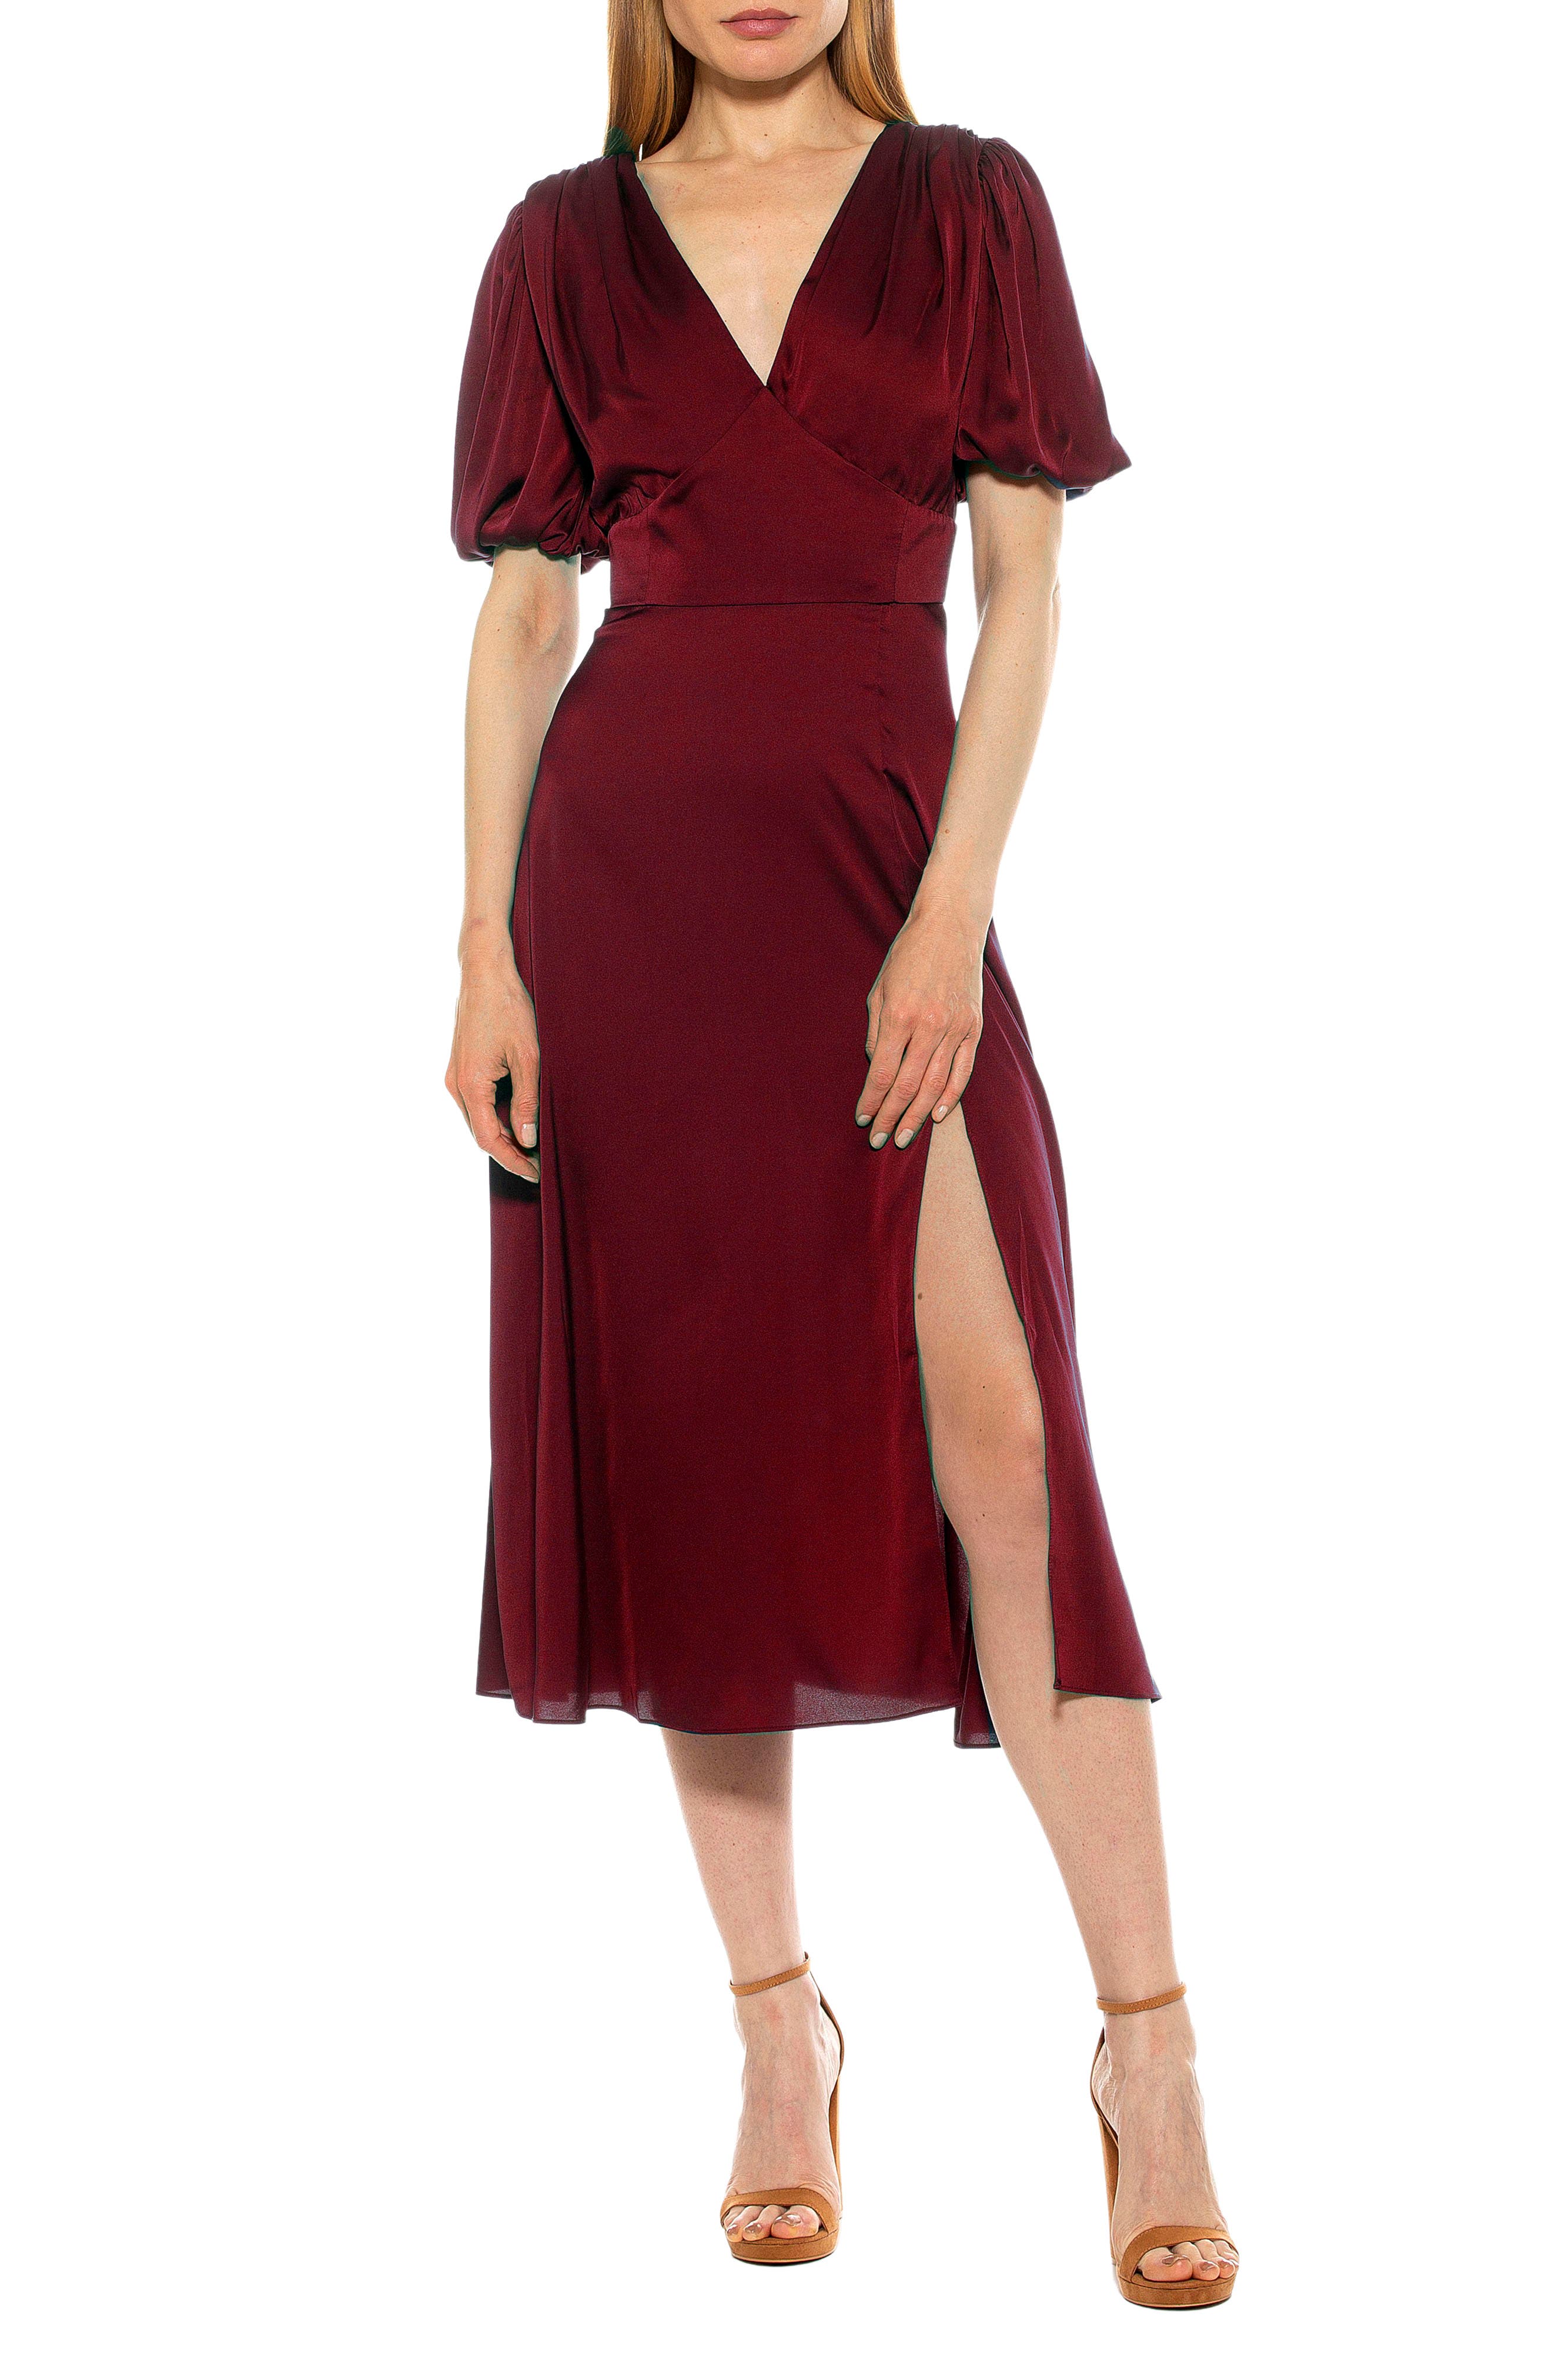 Alexia Admor V-neck Puff Sleeve Dress In Burgundy